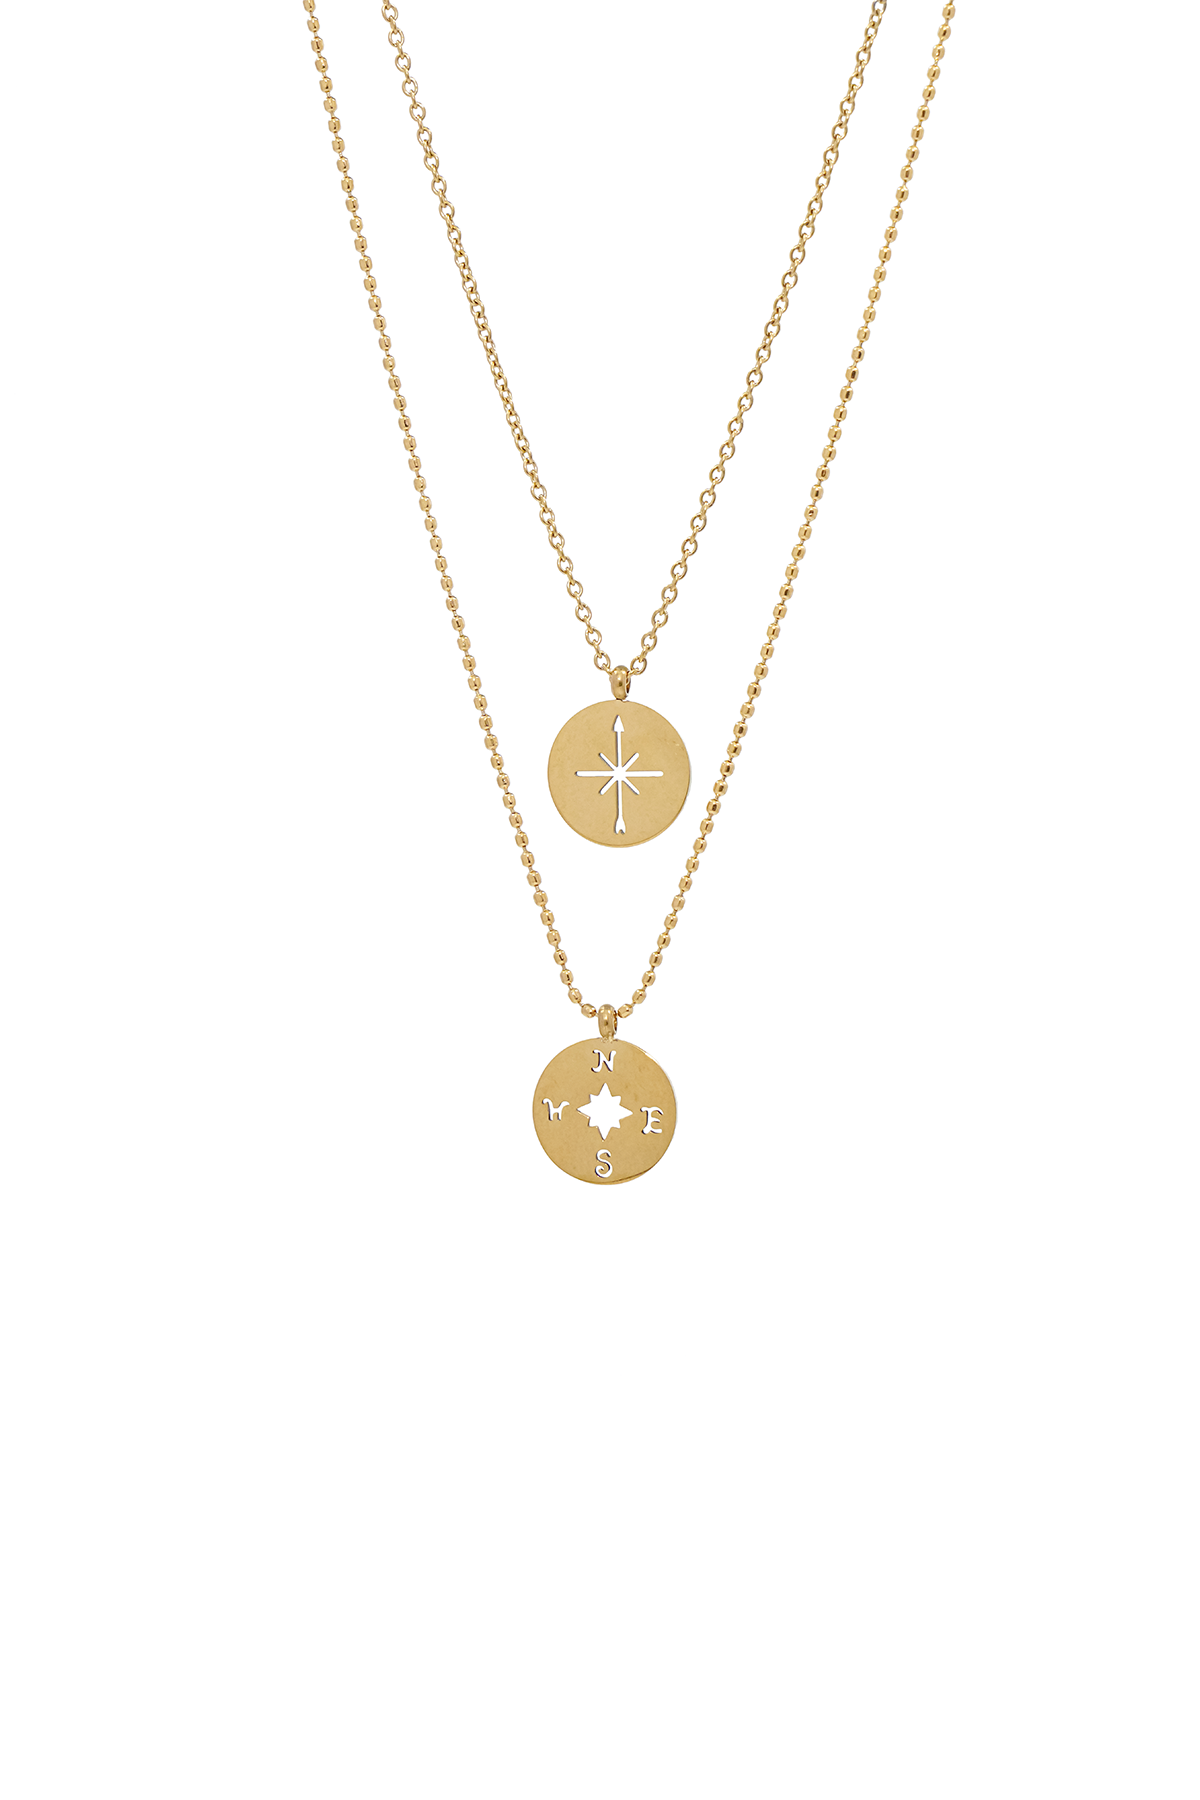 Signature double necklace - Shiny gold compass